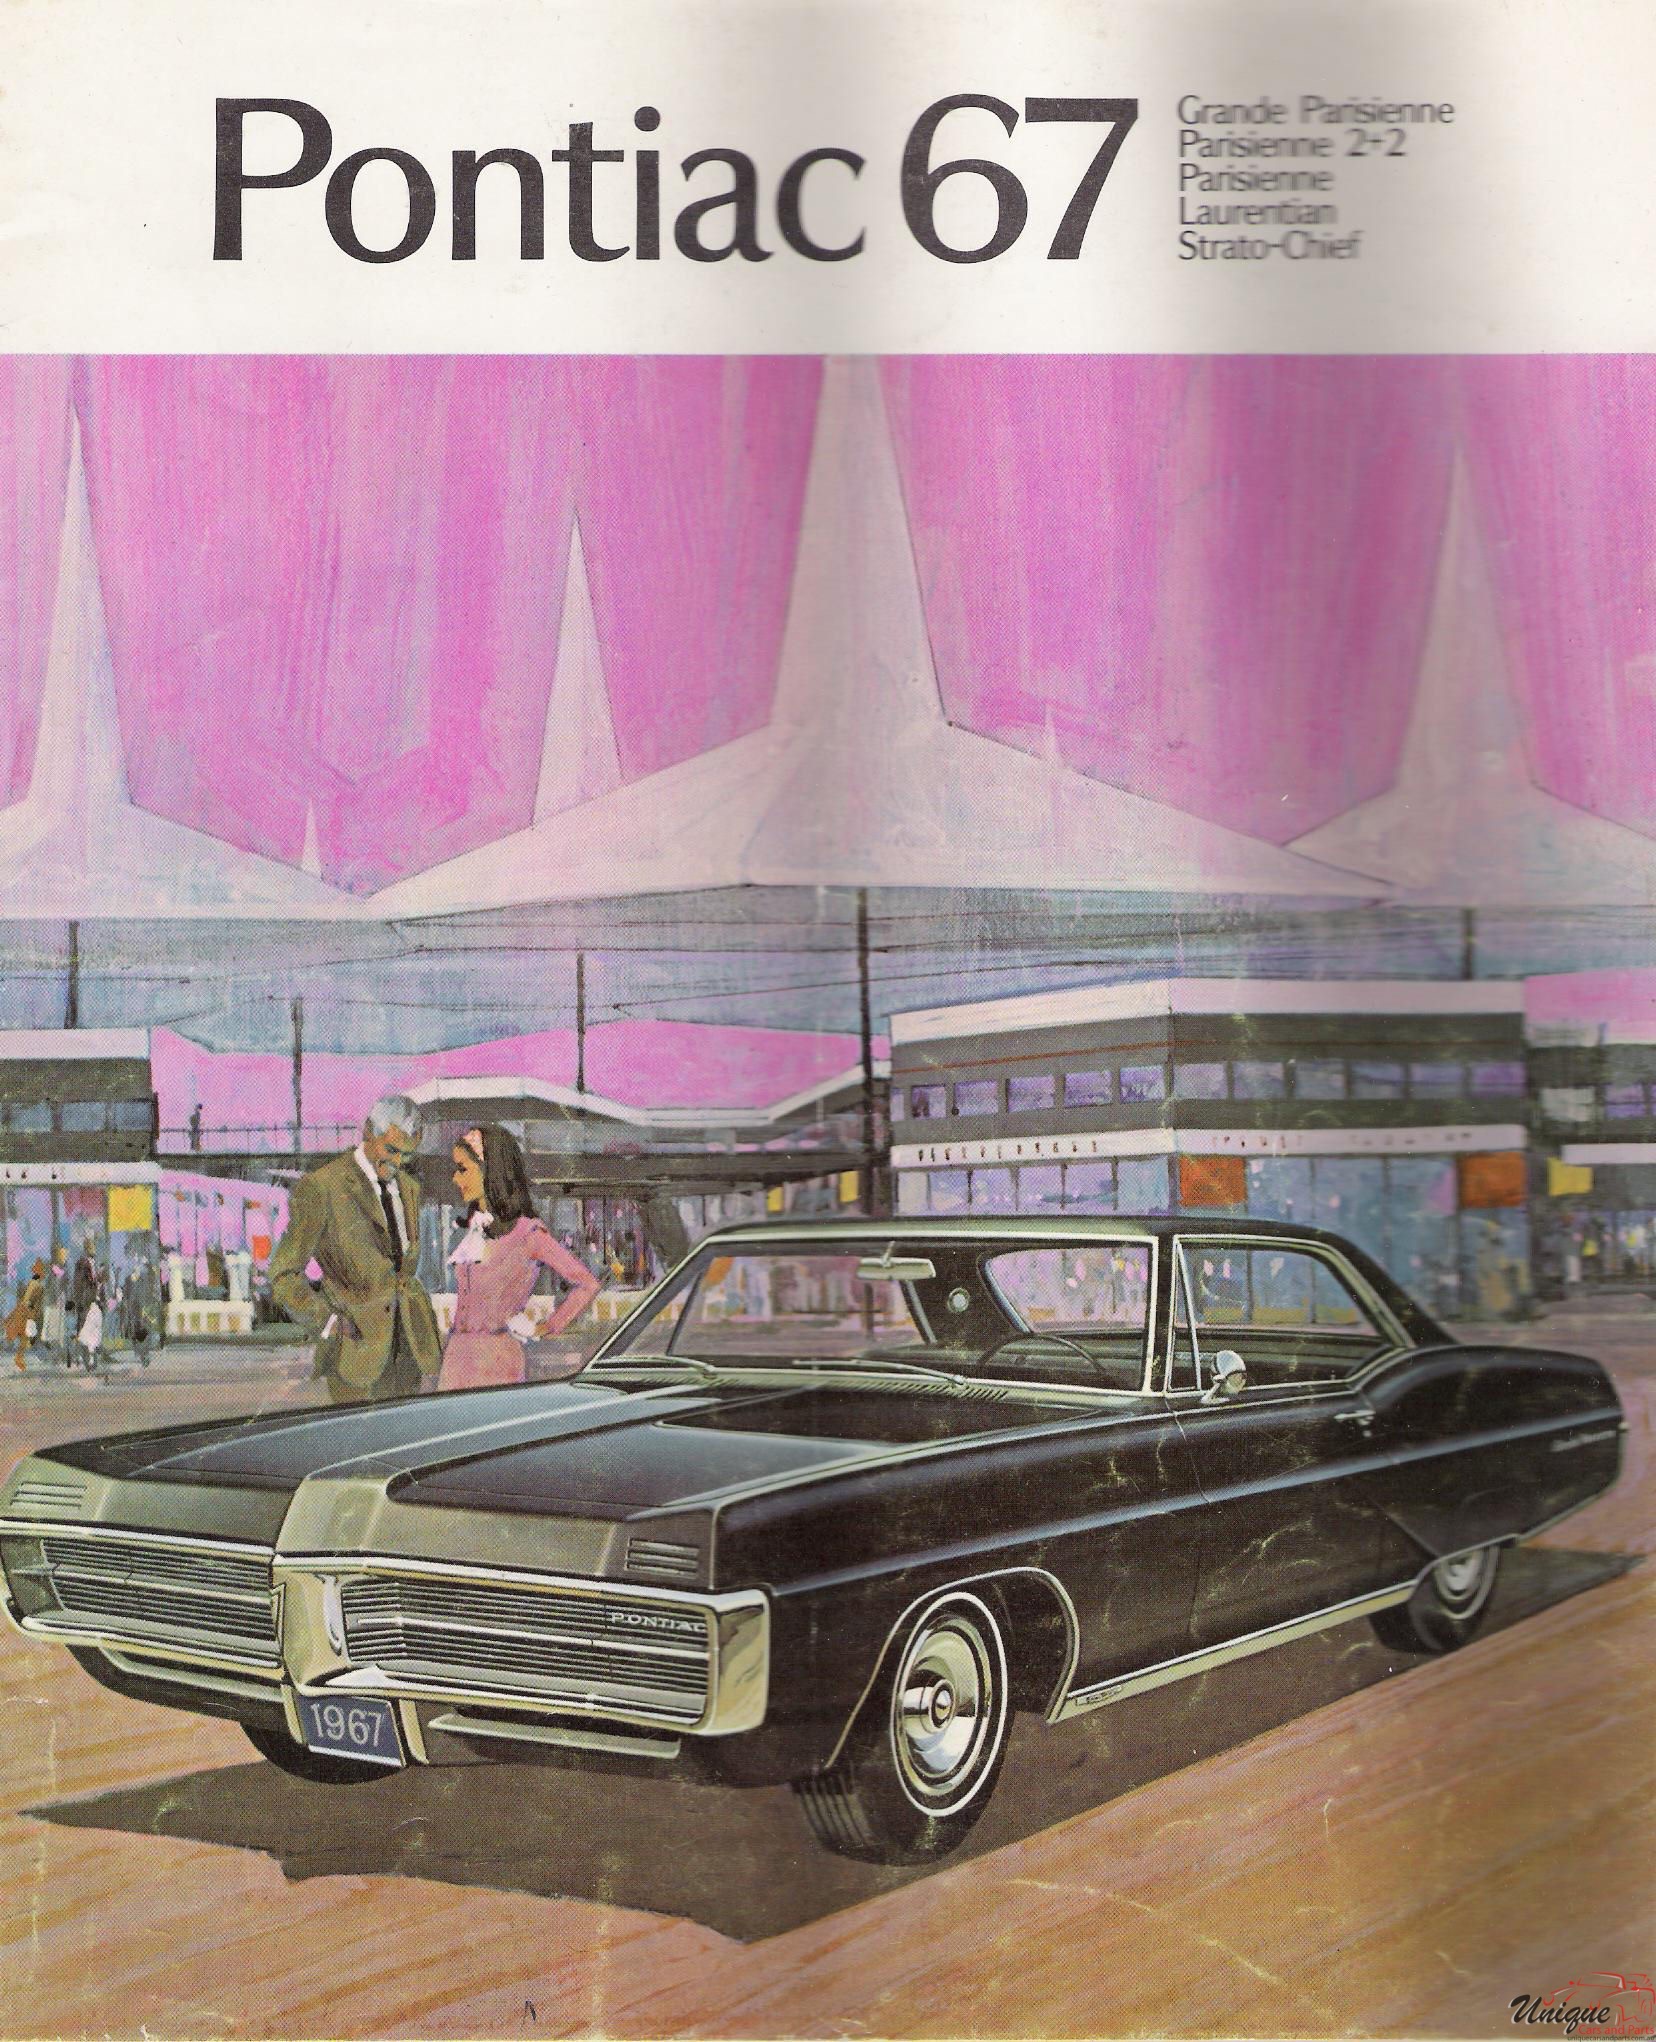 1967 Canadian Pontiac Brochure